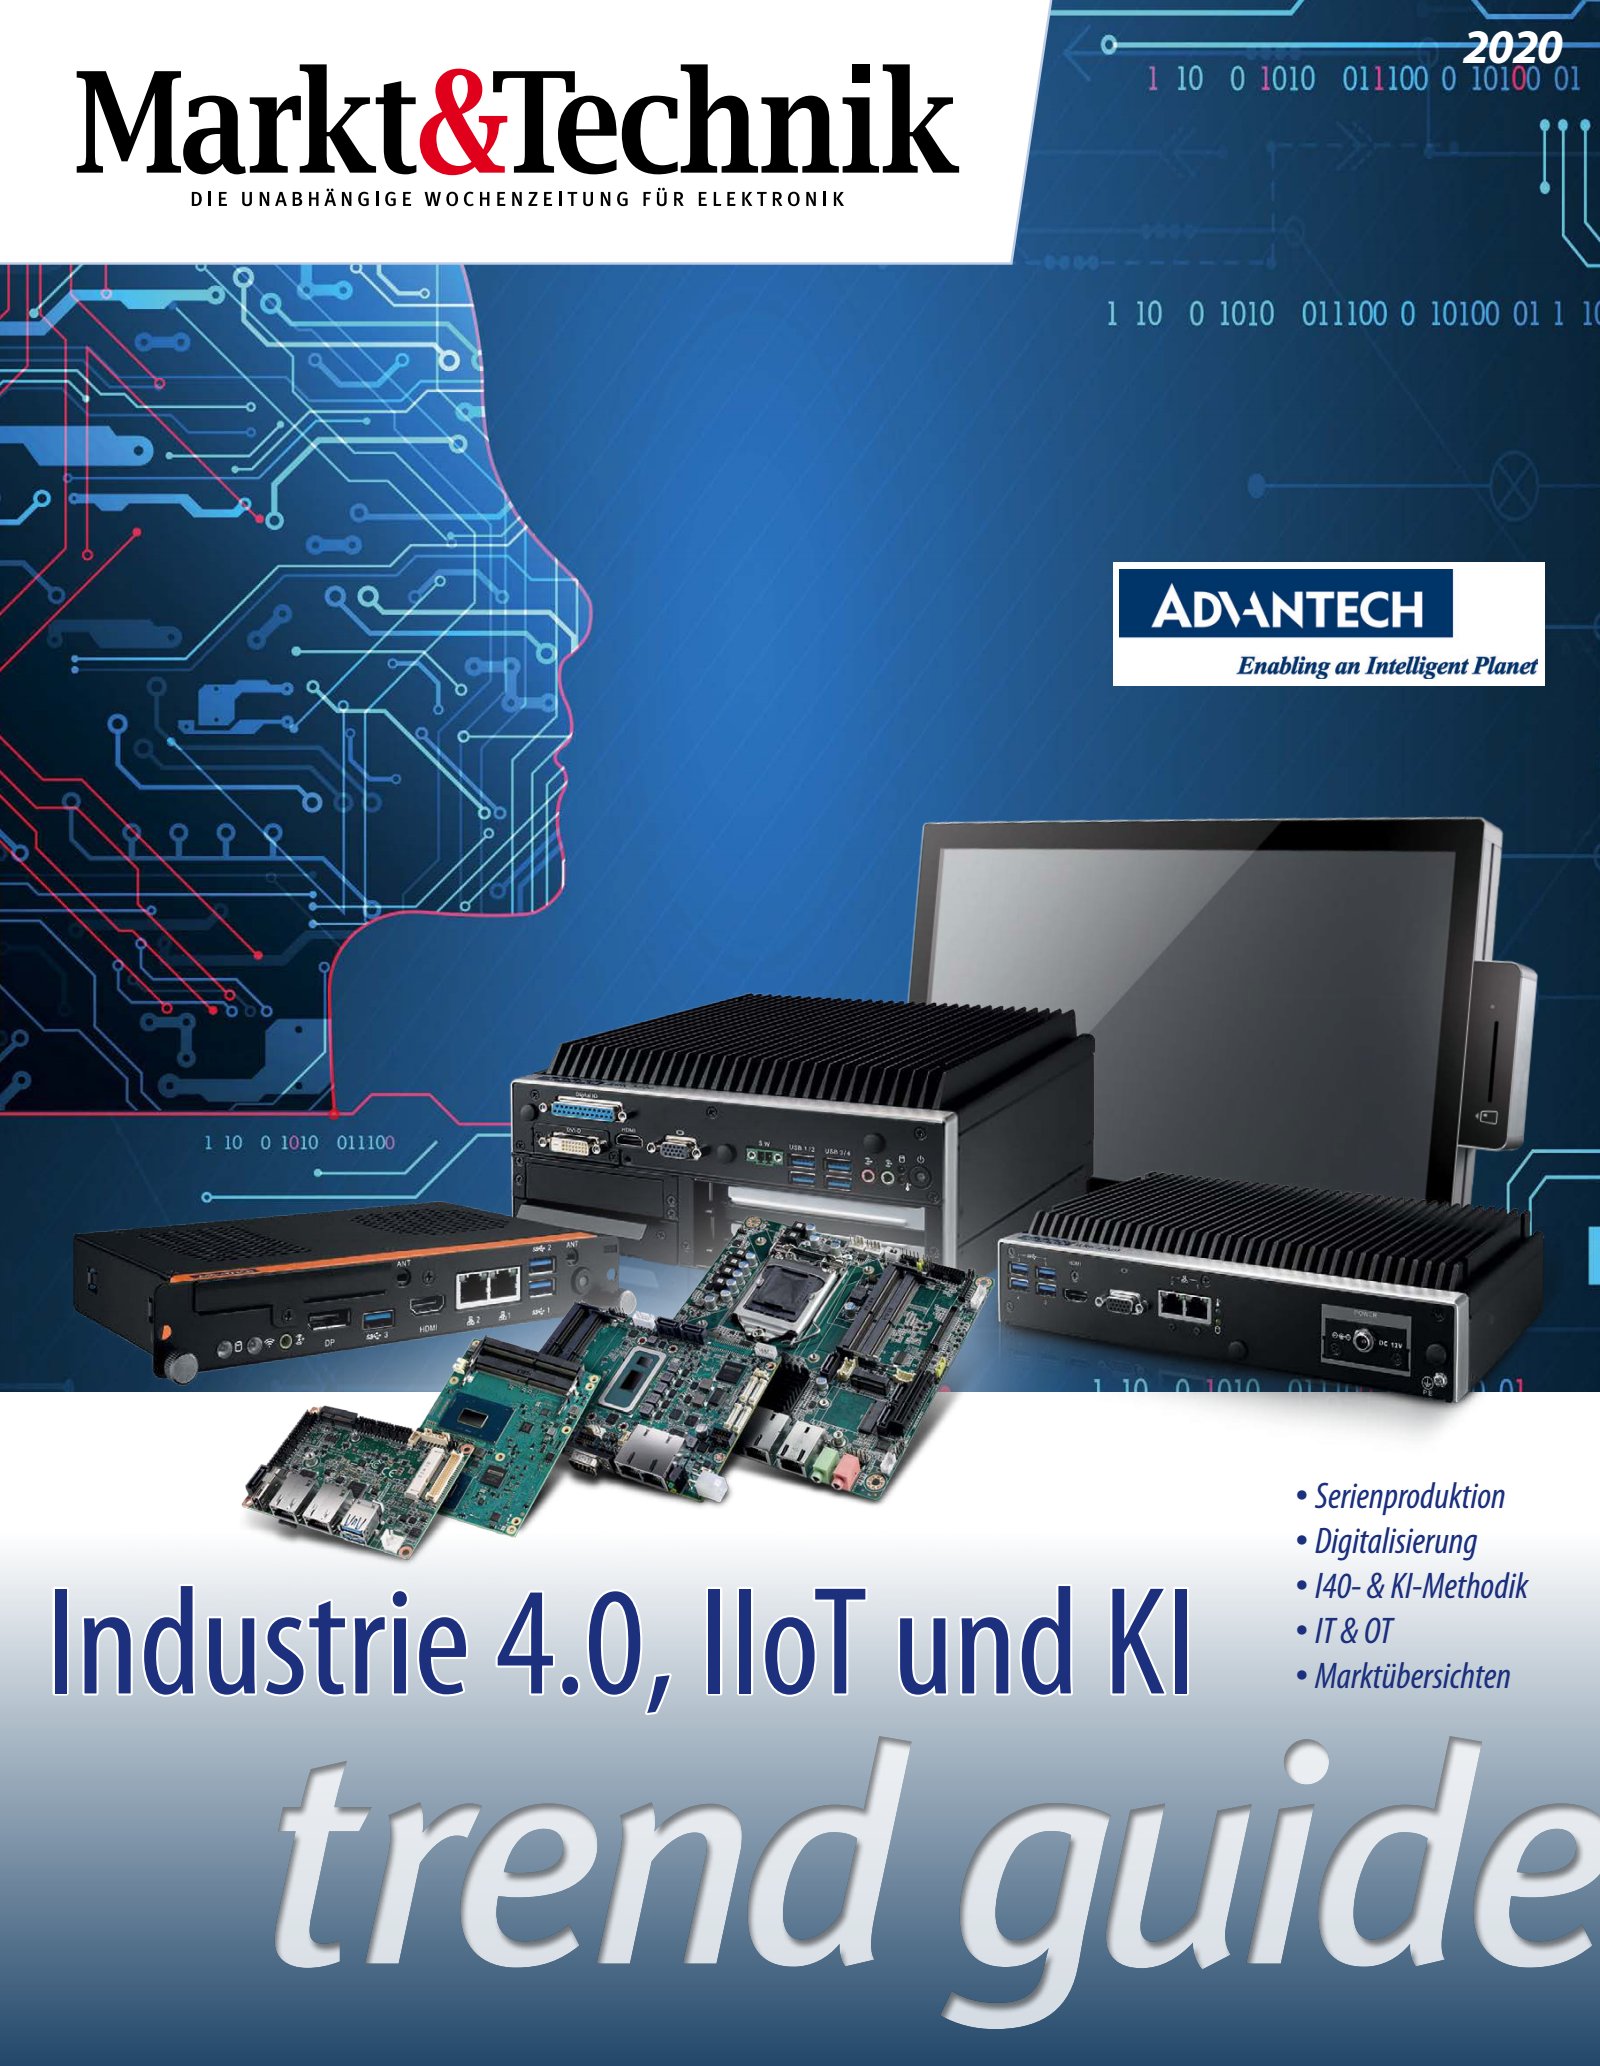 Markt&Technik Trend-Guide Industrie 4.0, IIoT und KI 2020 Digital